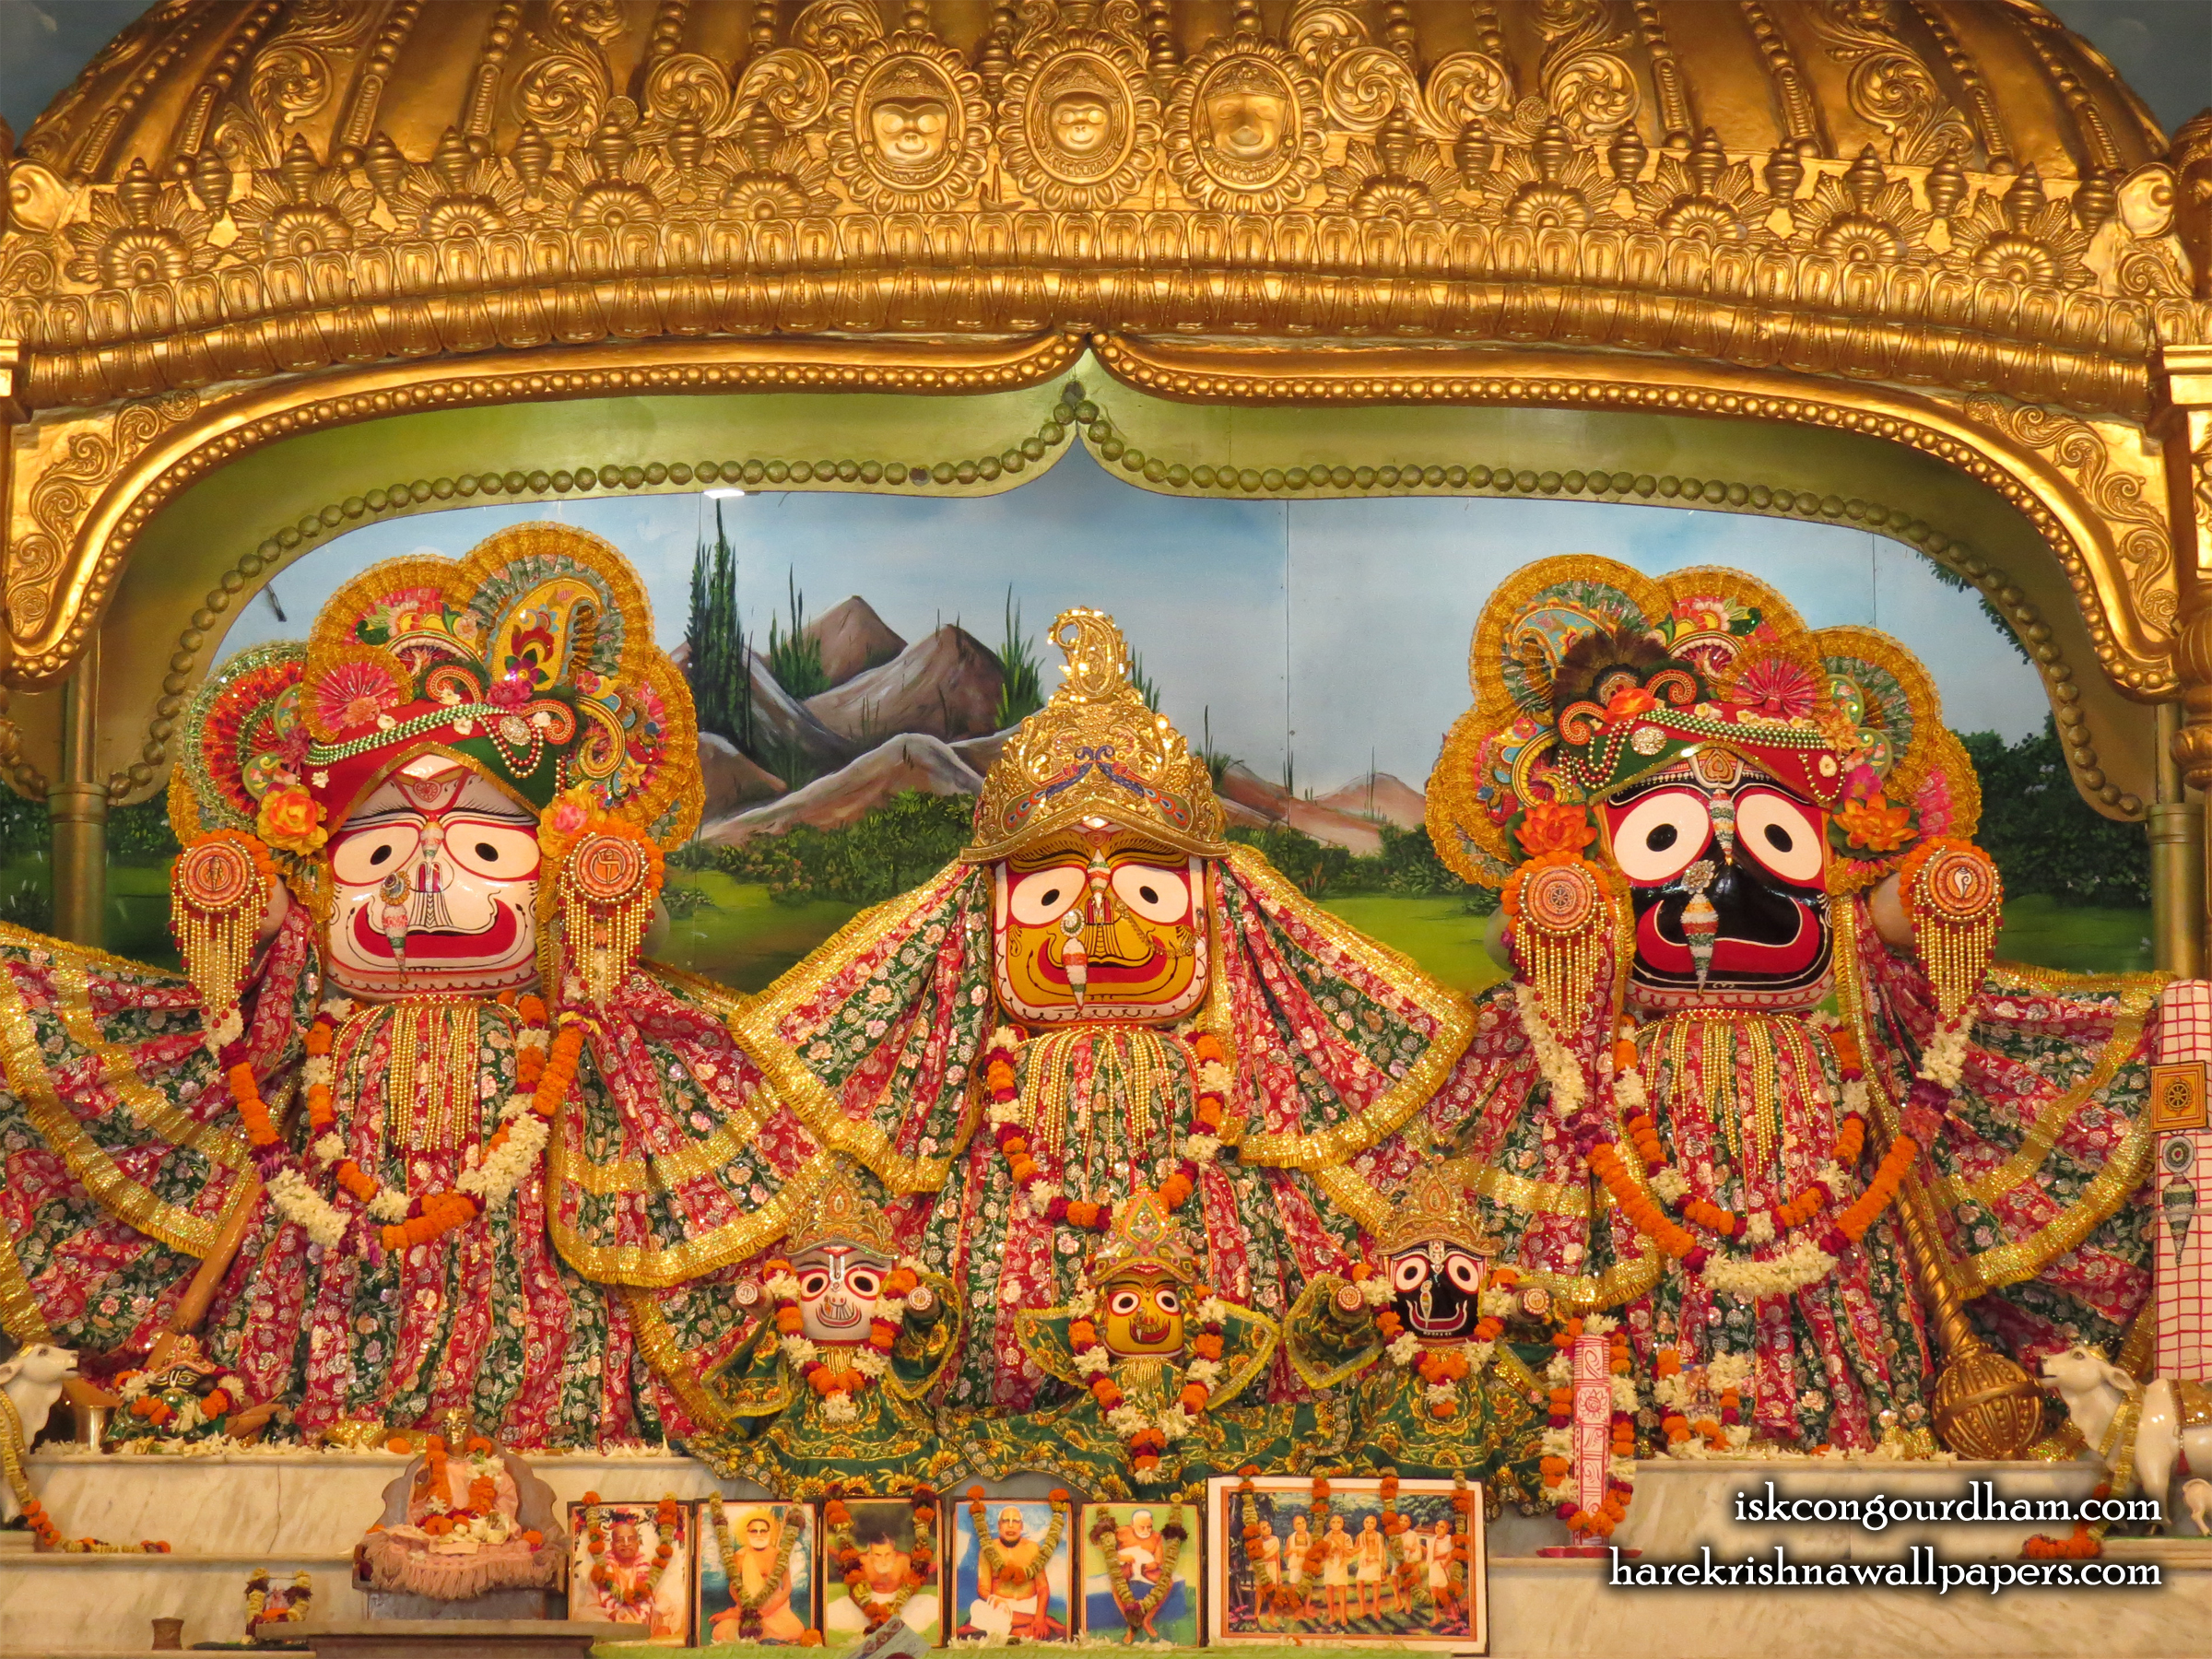 Jagannath Baladeva Subhadra Wallpaper (001) Size 2400x1800 Download